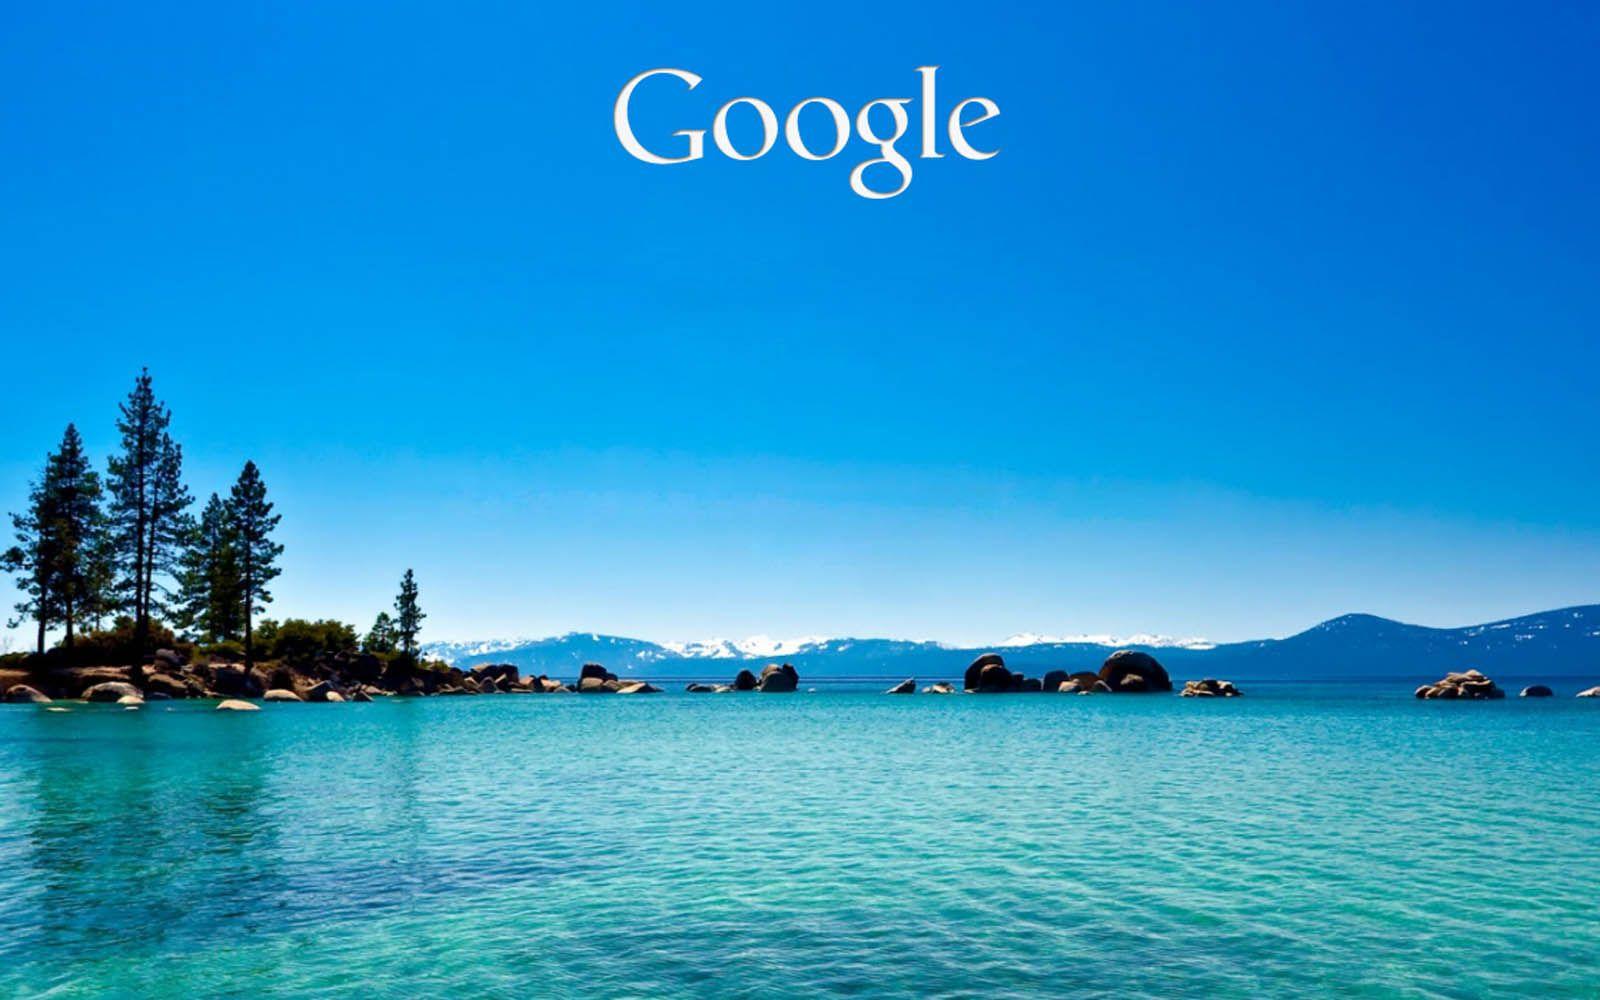 Google Desktop HD Wallpaper and Background